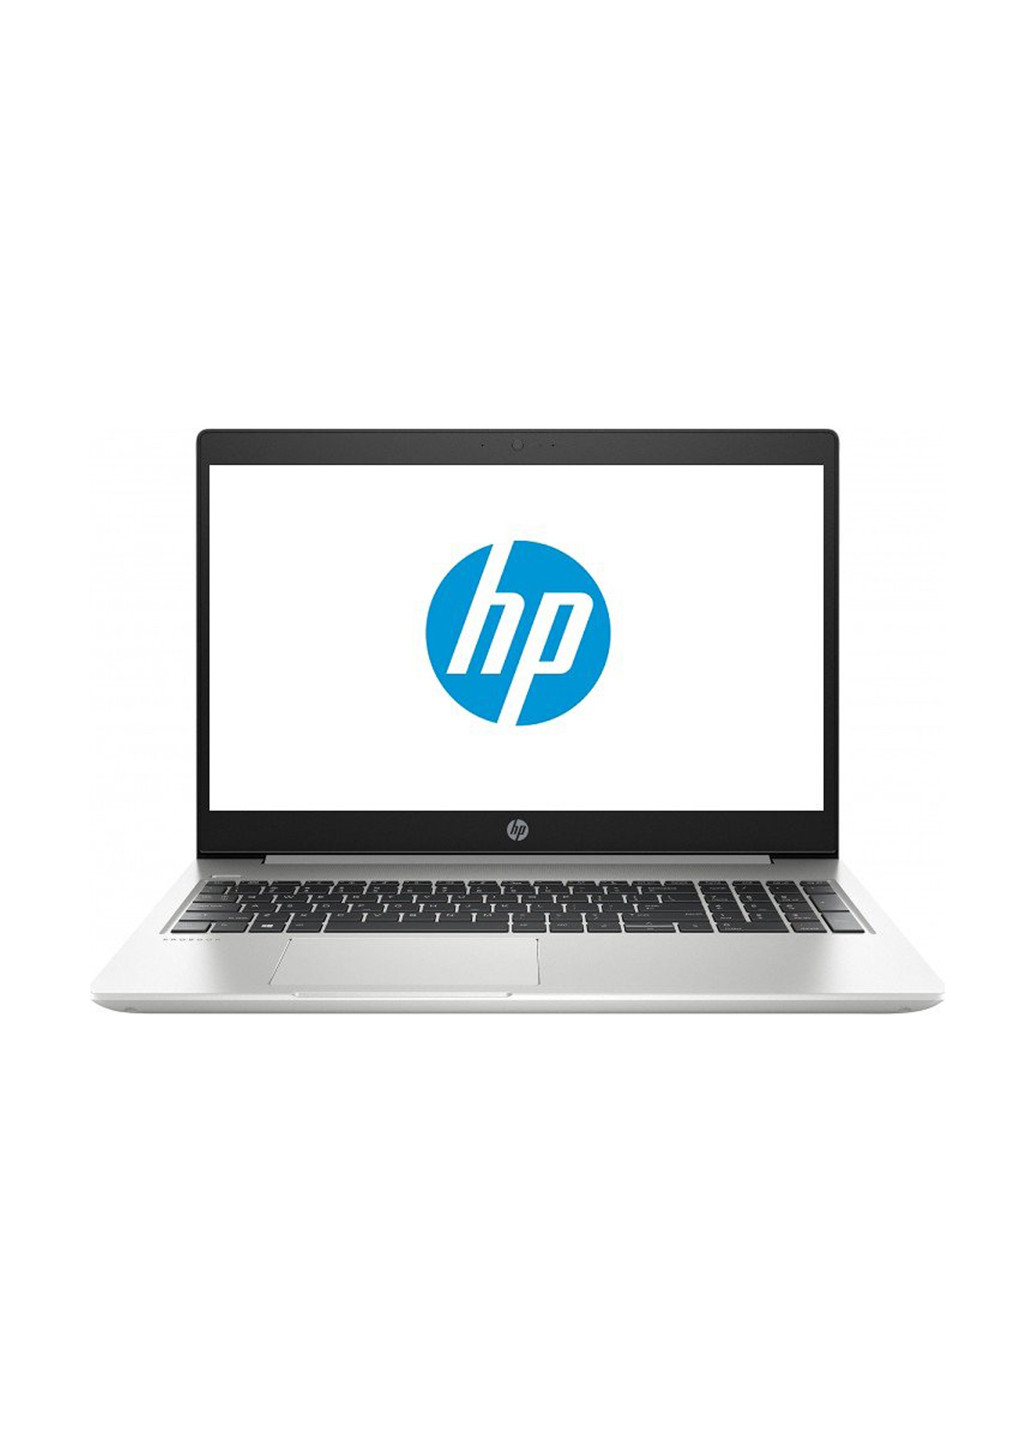 Ноутбук HP probook 450 g6 (4sz47av_v22) silver (173921859)